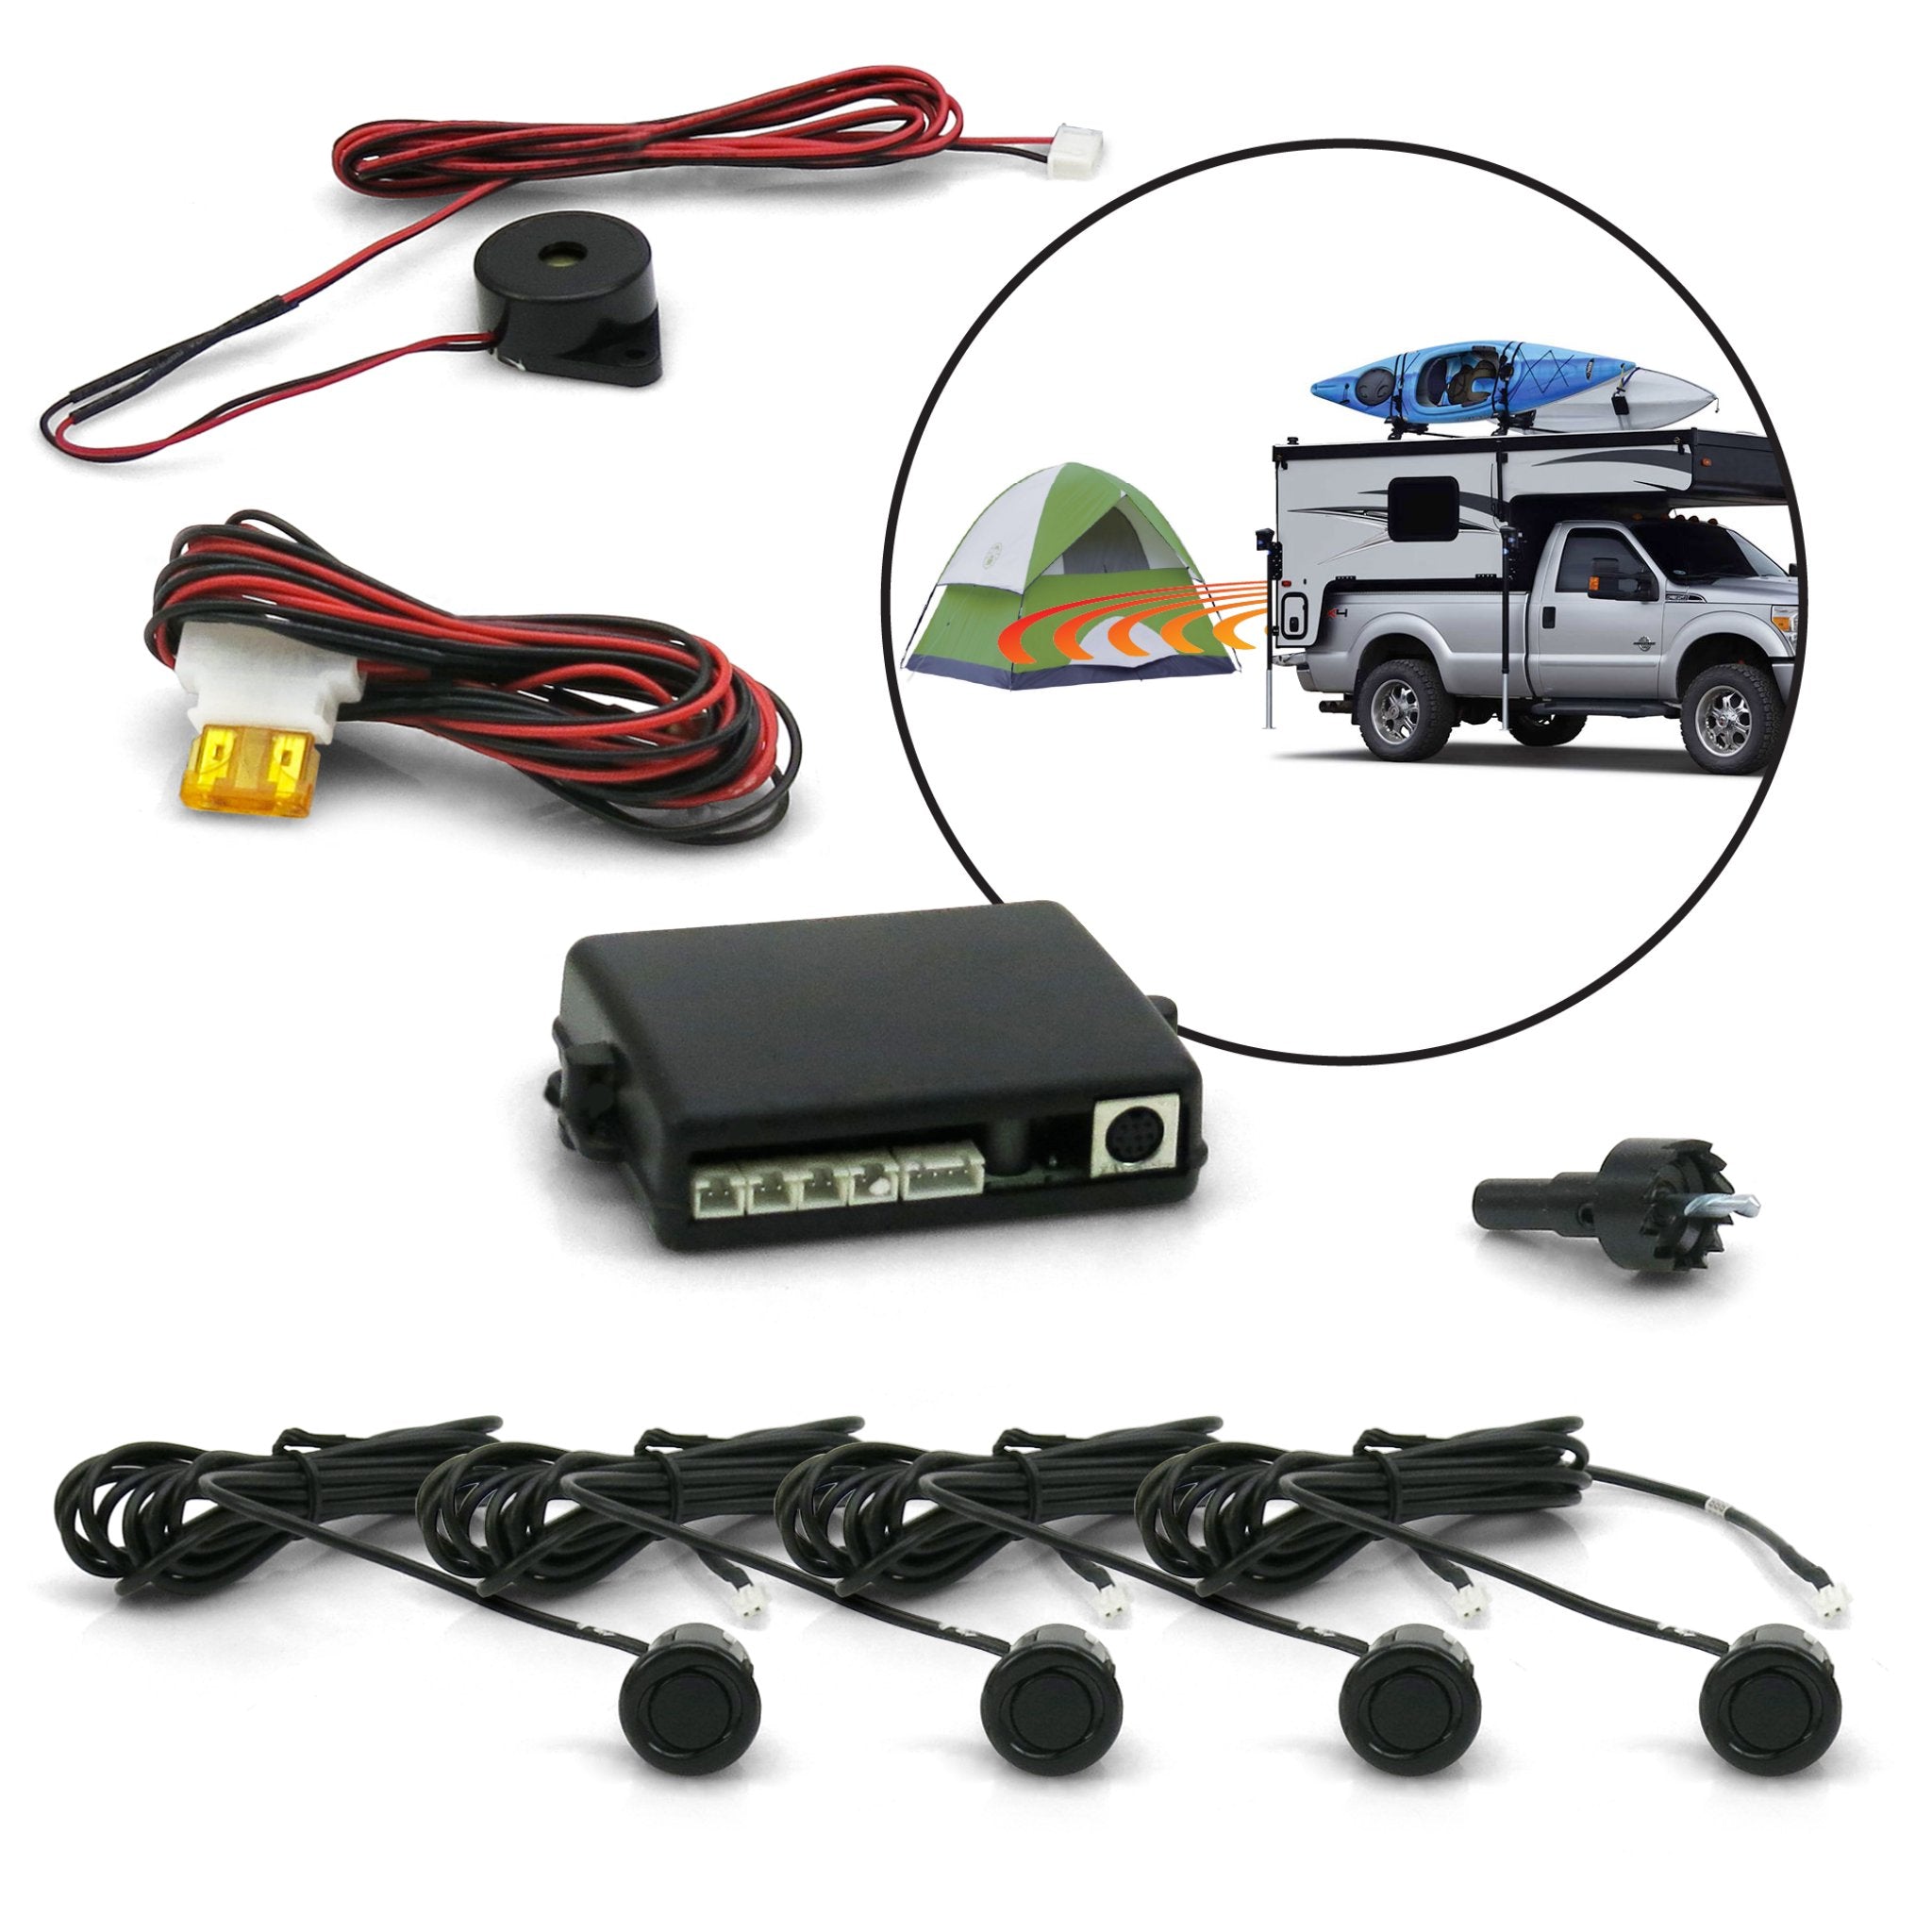 Car Backup Reverse Radar Sensor System Kit Parking Rear Safety Sound Alarm Alert